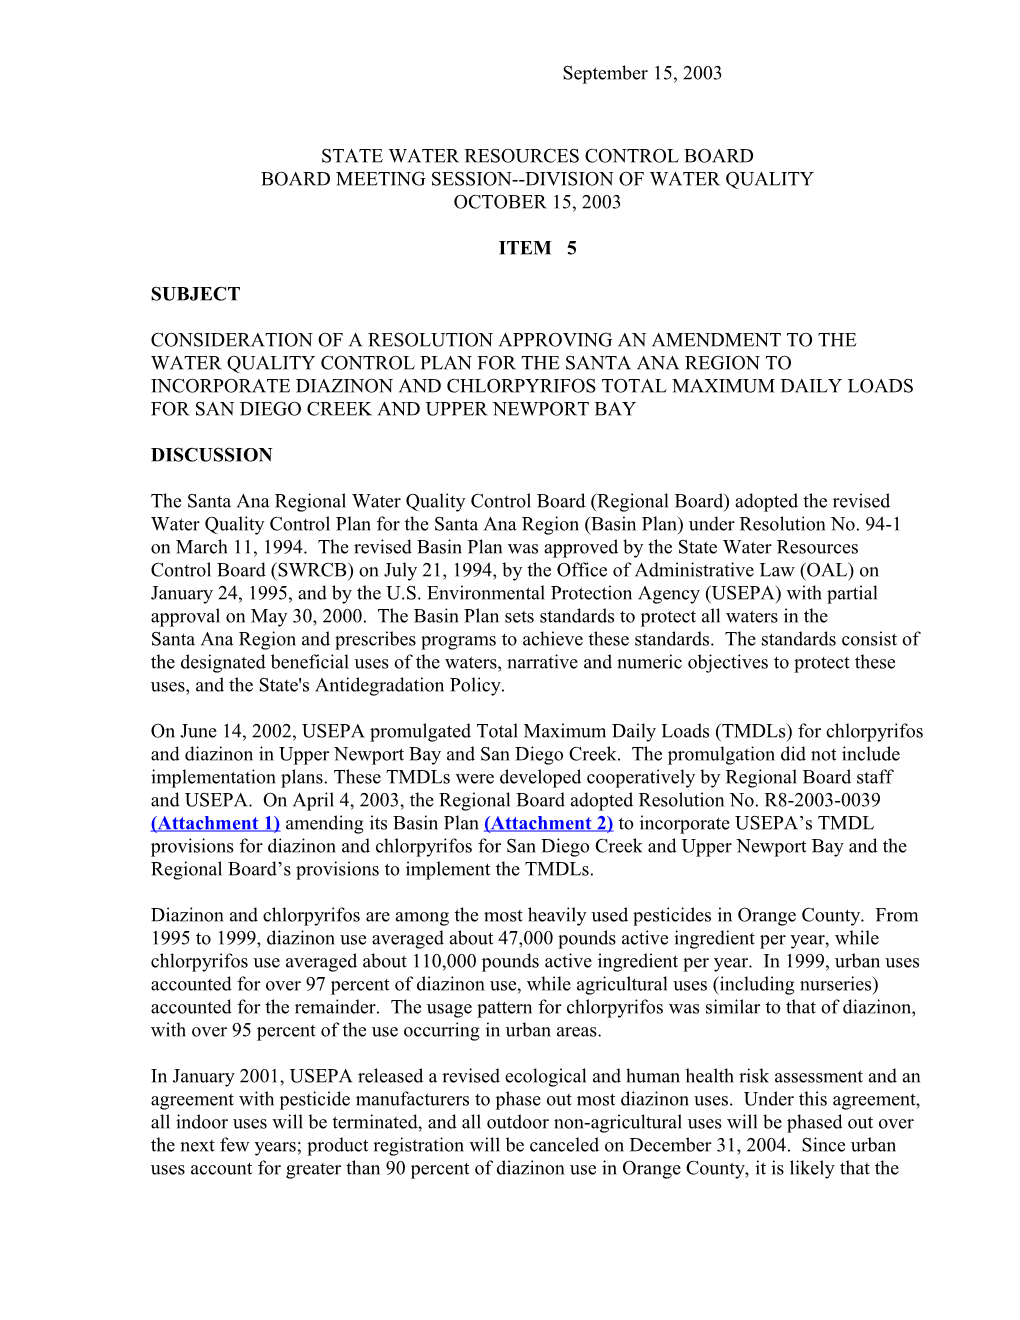 Santa Ana Basin Plan Amendment / Tmdls for San Diego Creek and Upper Newport Bay